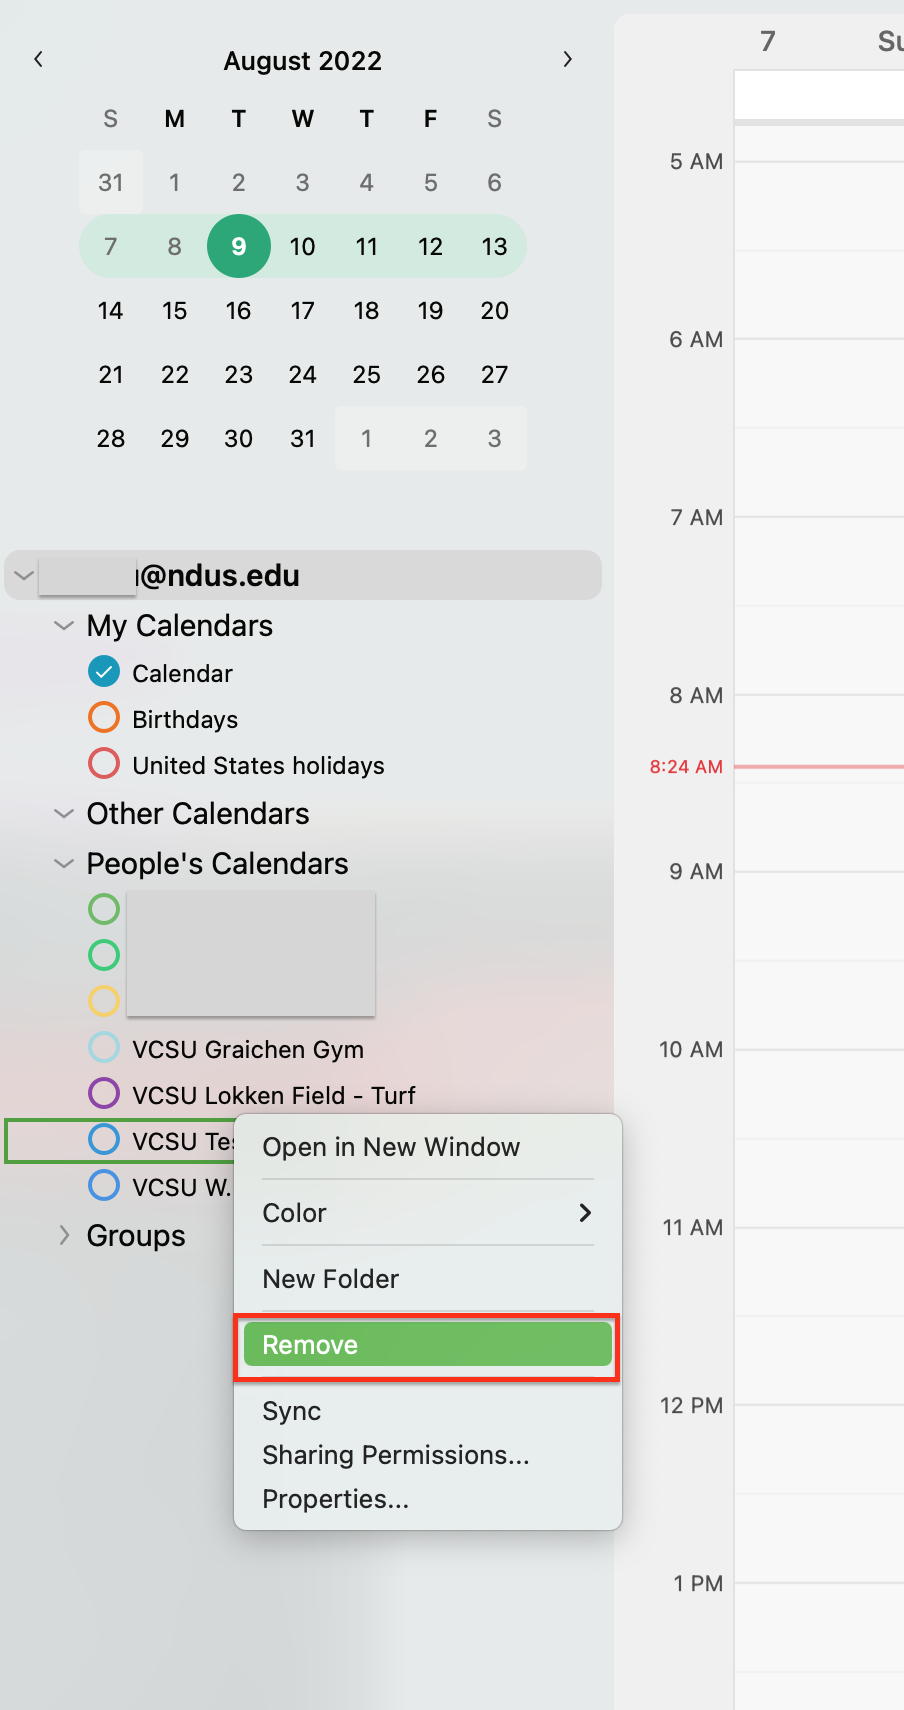 Open Outlook. Go to Calendar. Right click the calendar you wish to remove then click Remove.